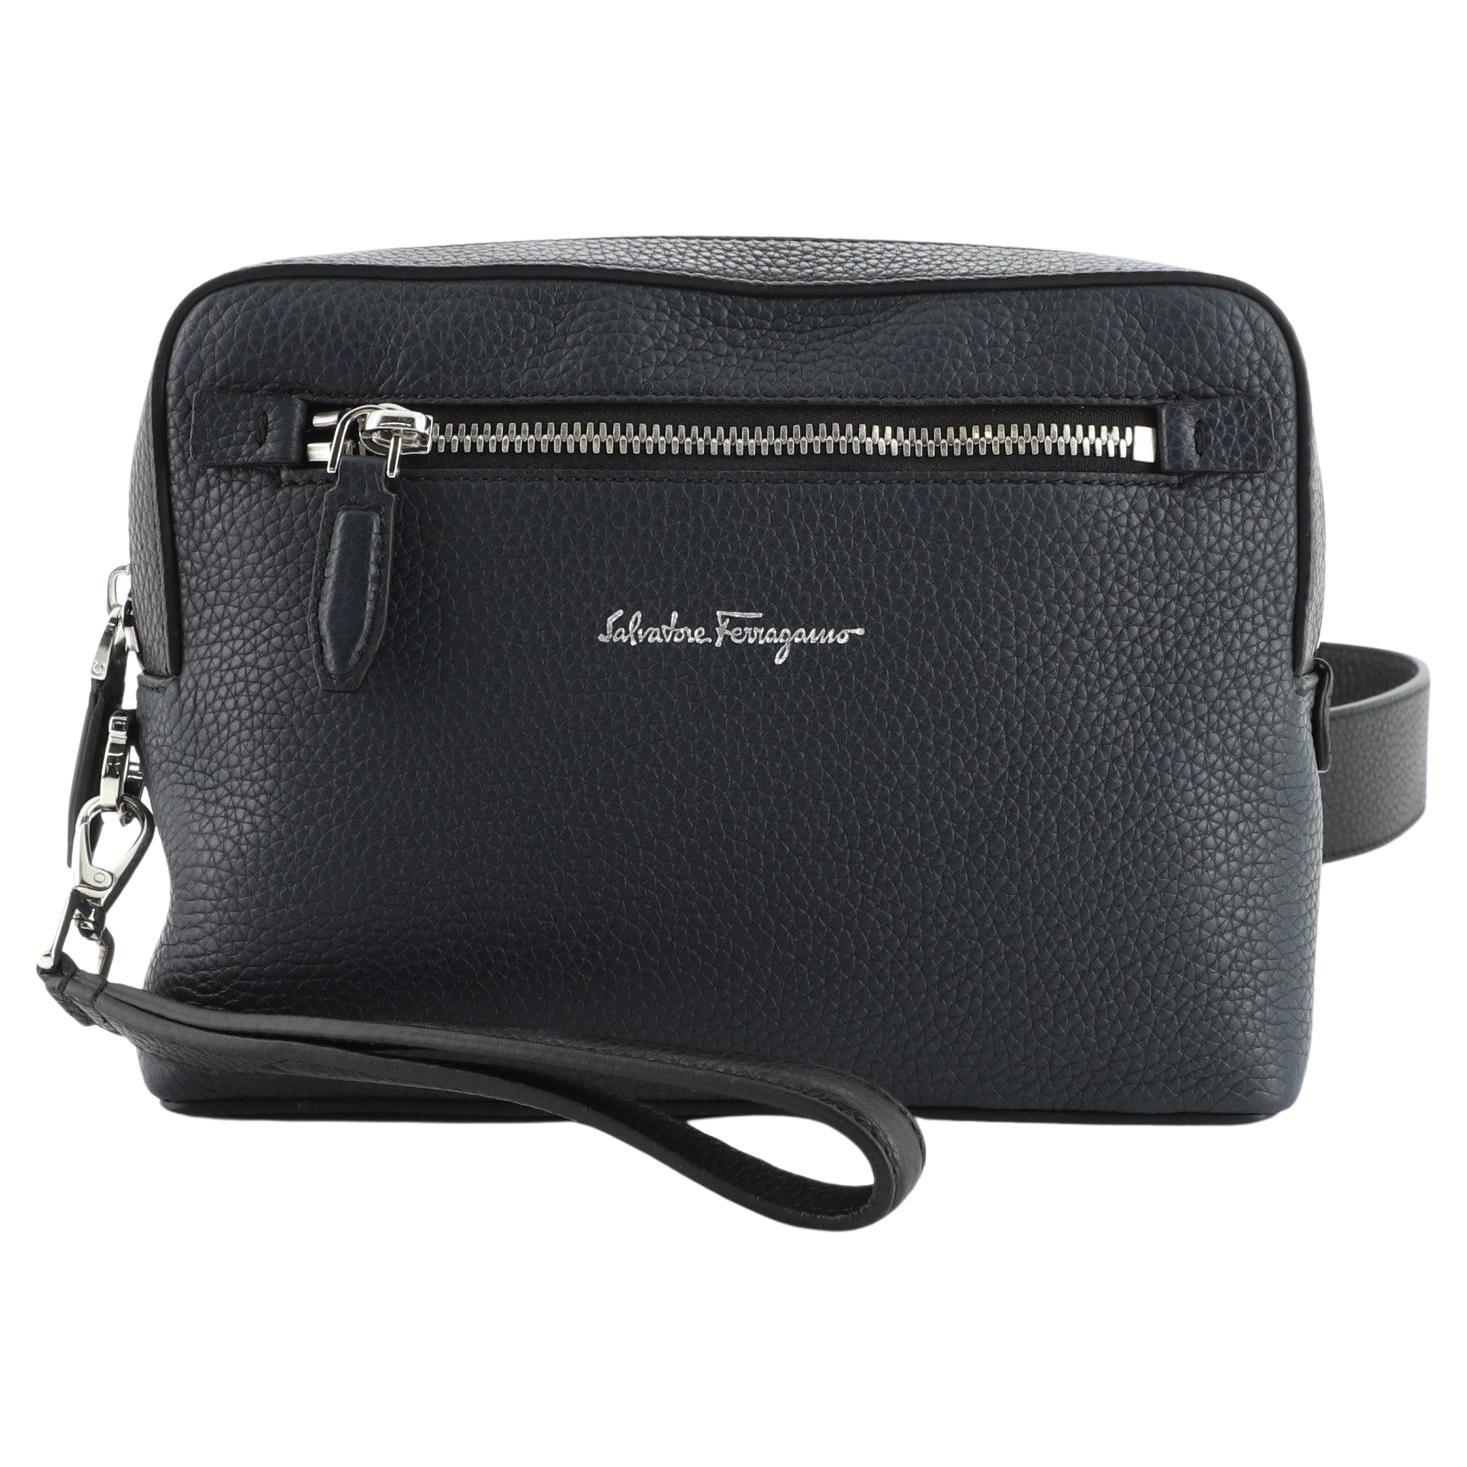 Salvatore Ferragamo Zip Around Convertible Belt Bag Leather